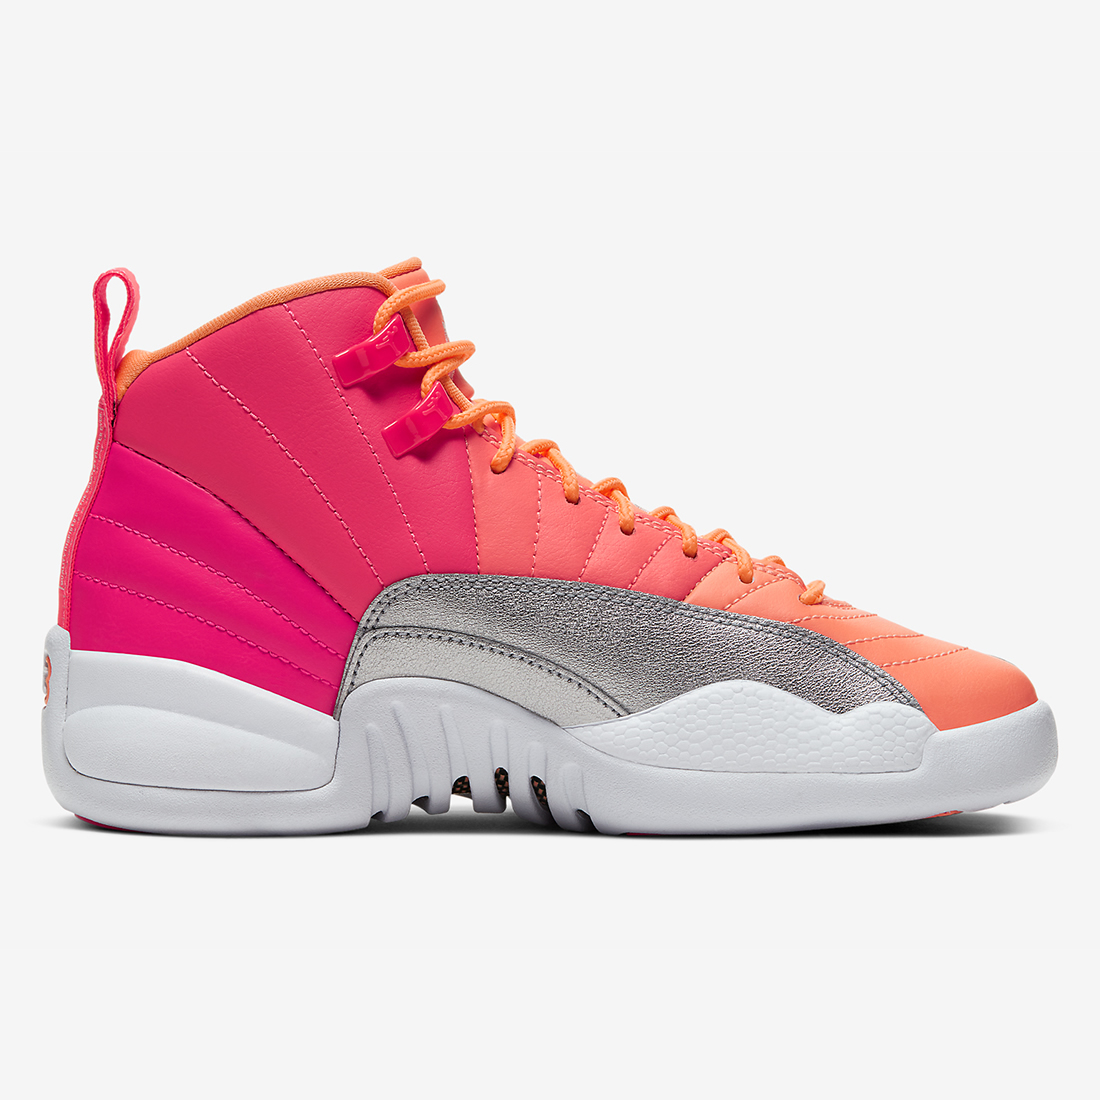 jordan 12s pink and orange